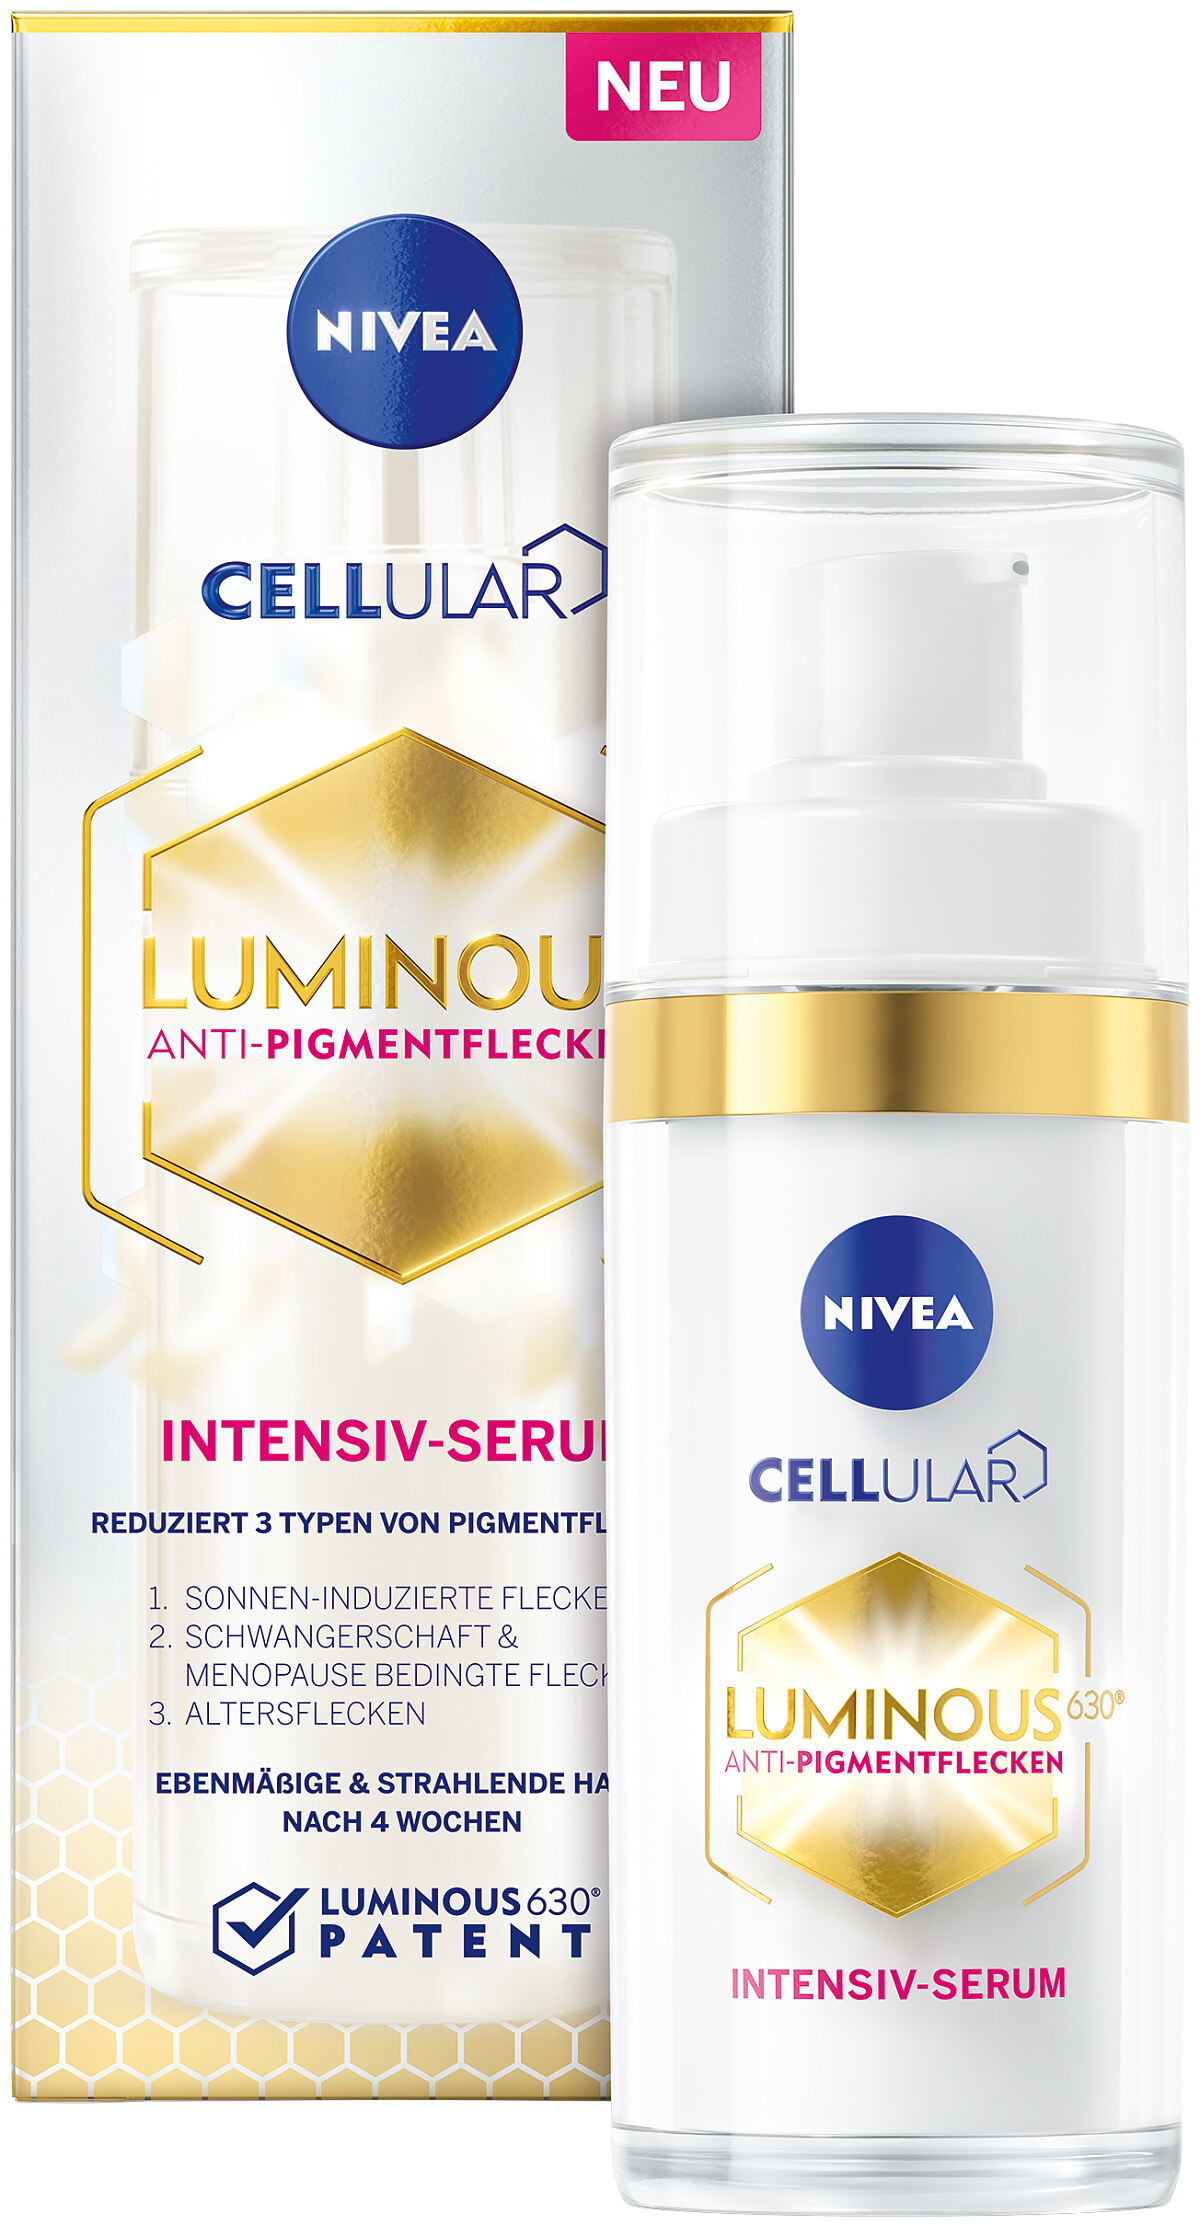 NIVEA Cellular Luminous630 AntiPigmentflecken Serum Kombi EUR 29,99